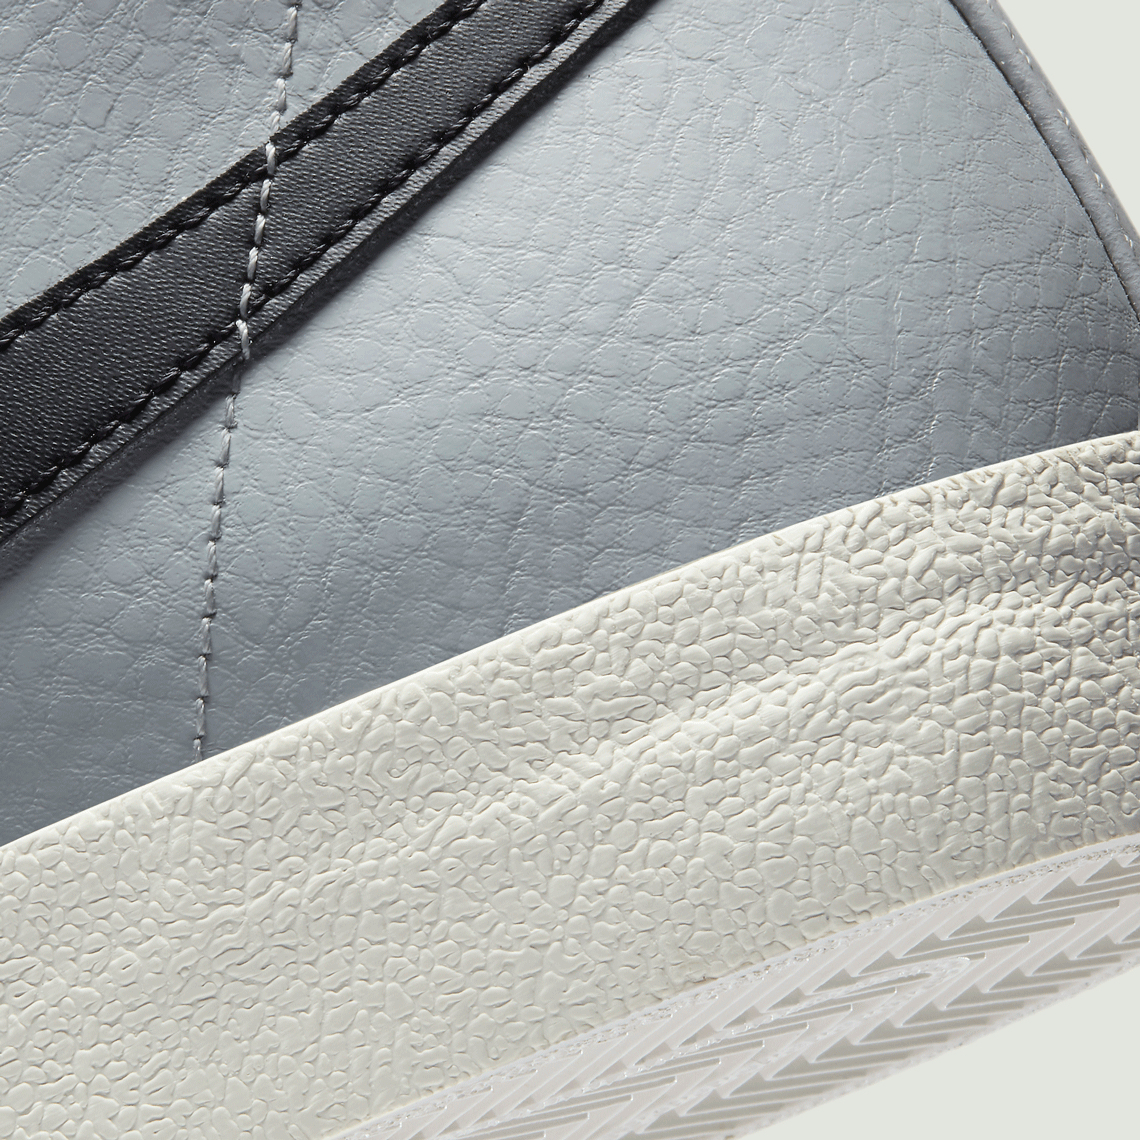 Nike Blazer Mid '77 Grey Black BQ6806-001 Release | SneakerNews.com